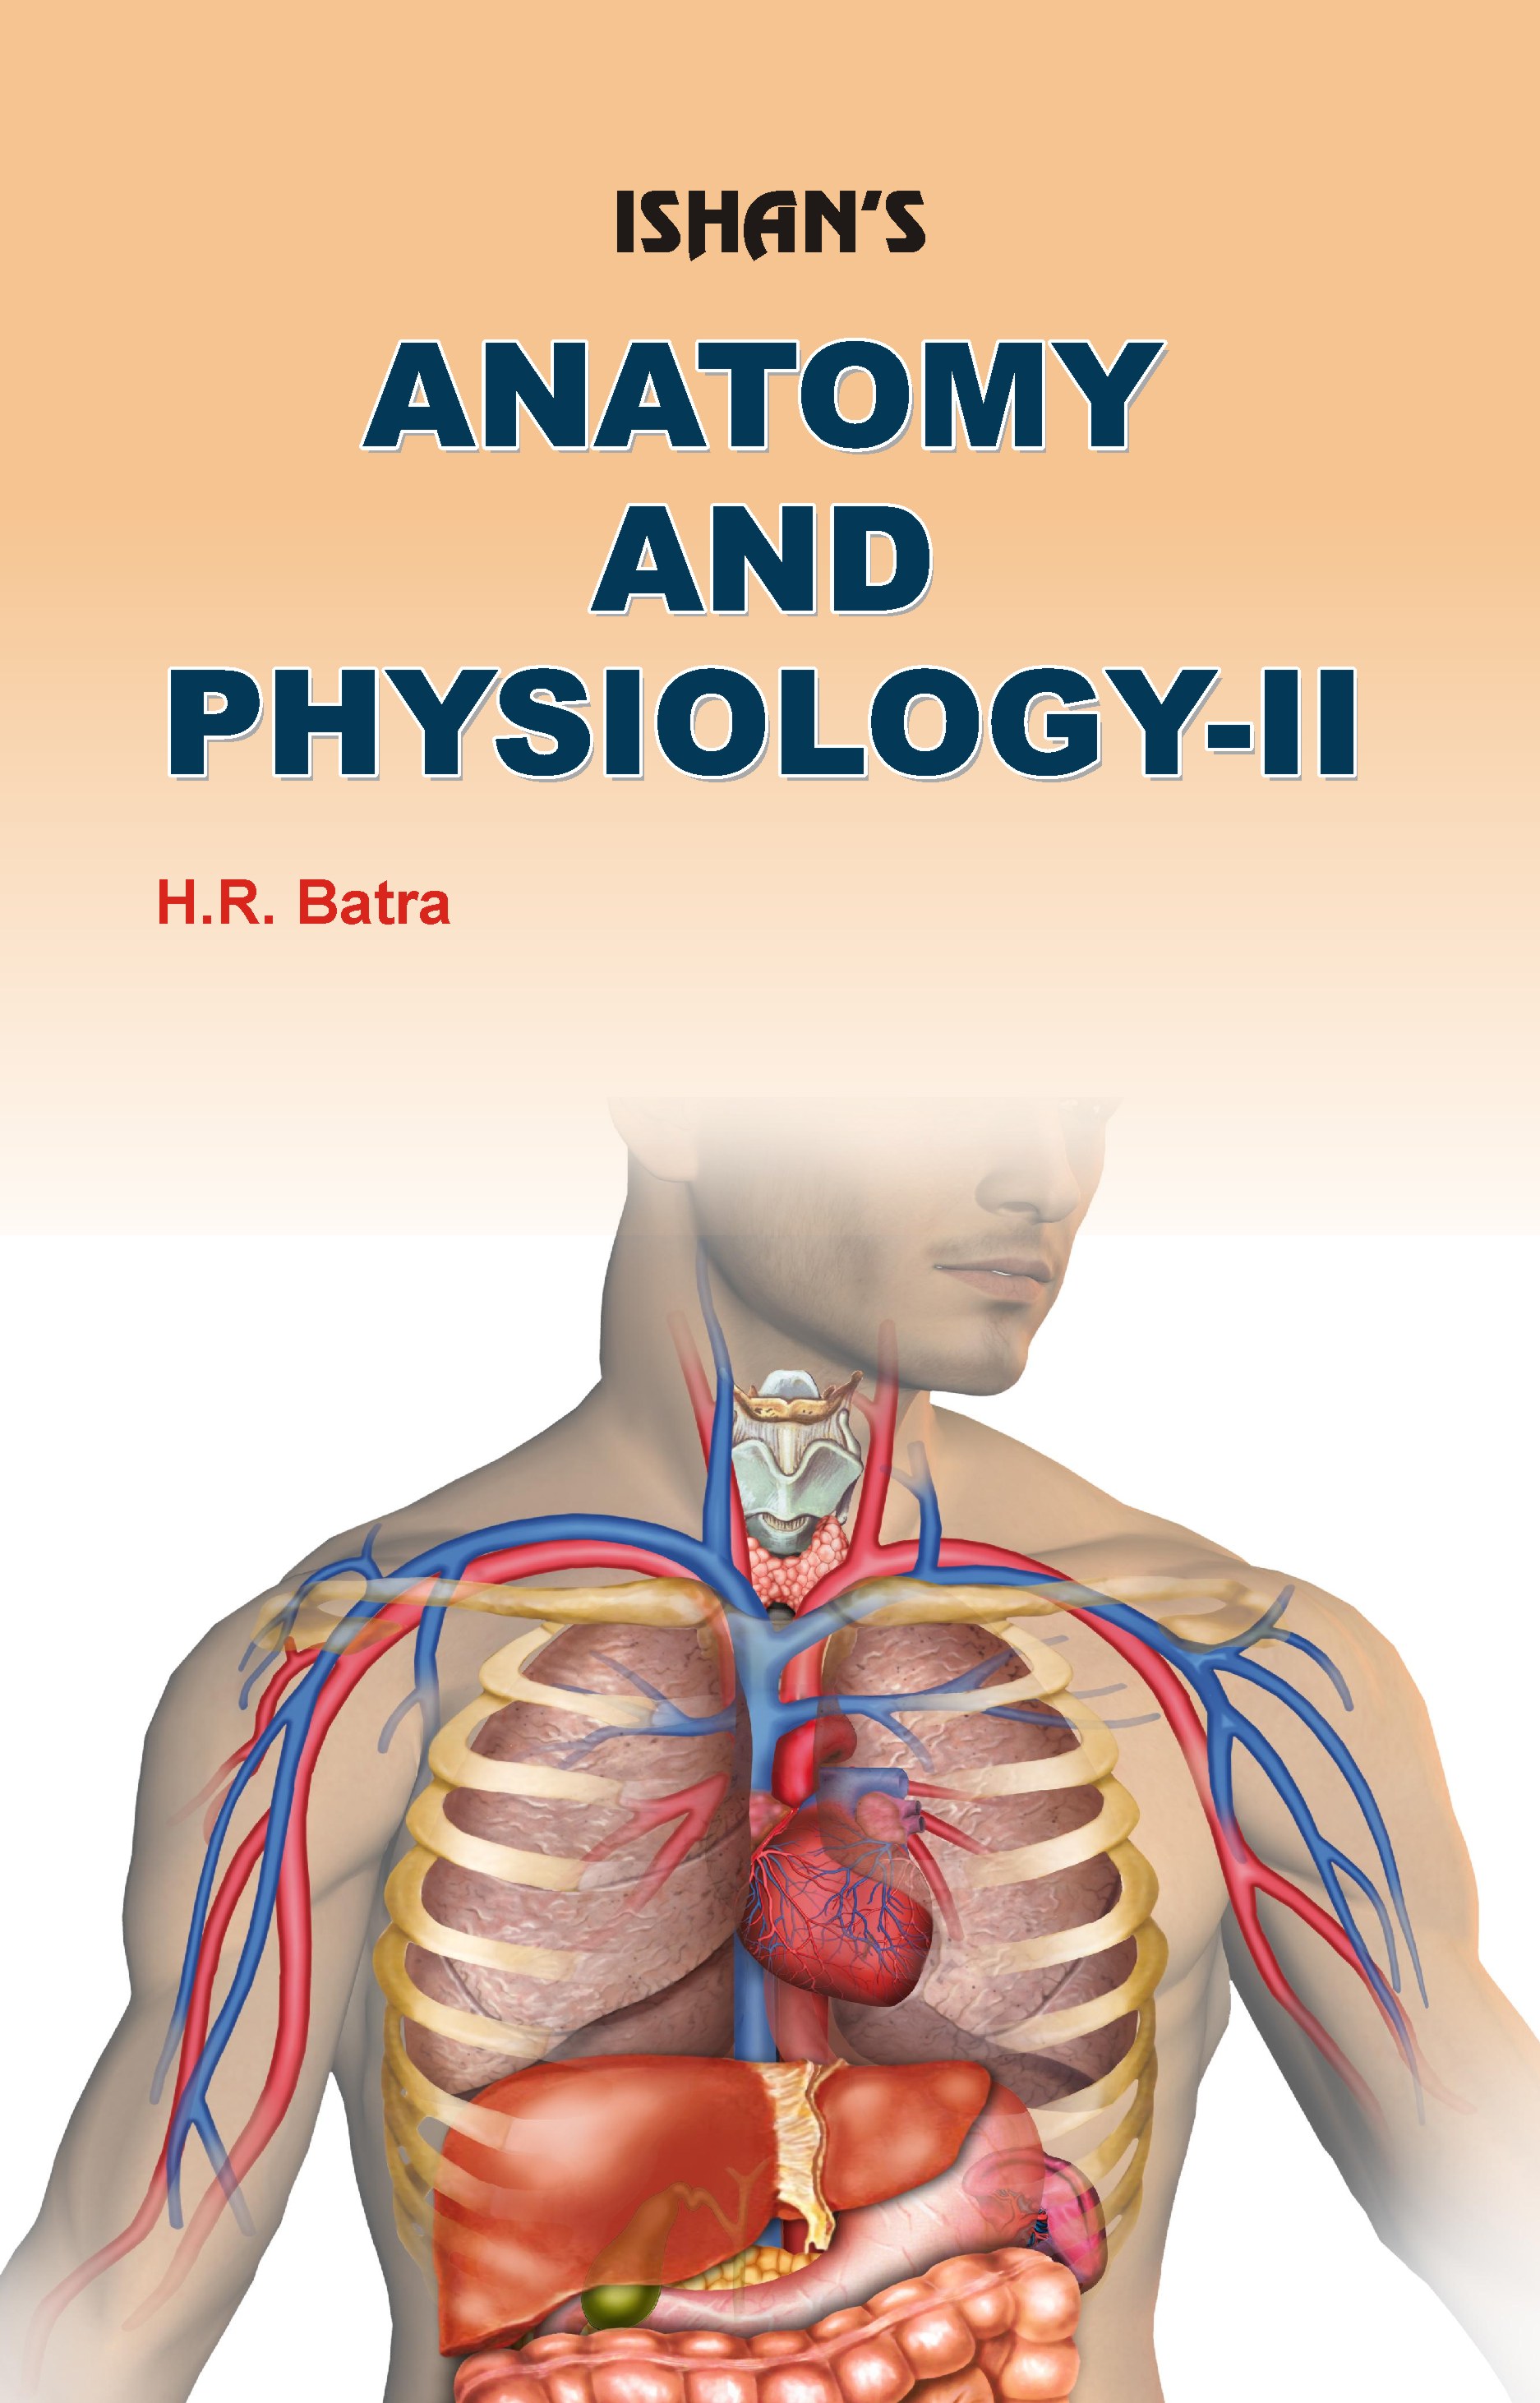 Anatomy and Physiology-II